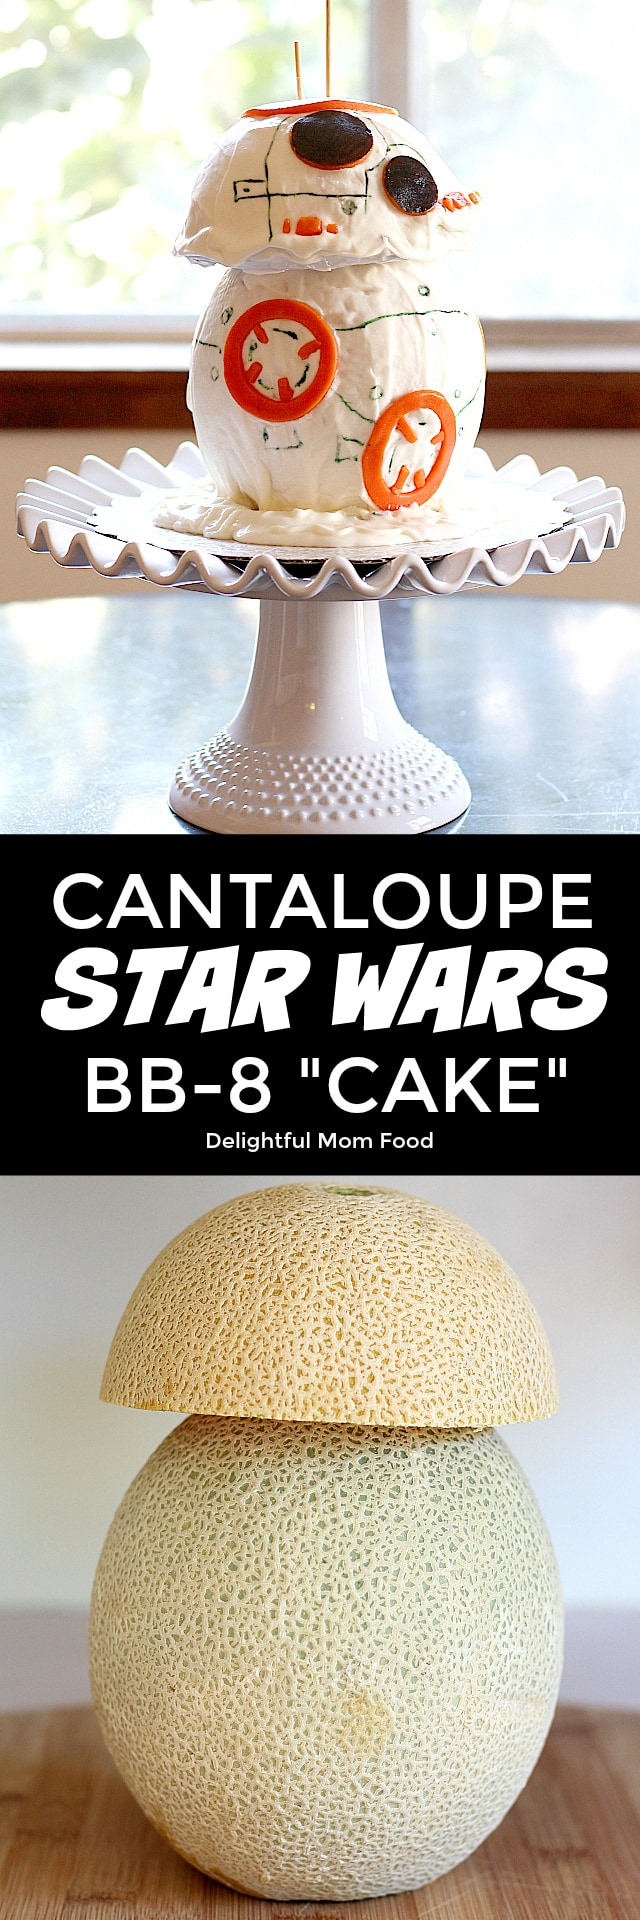 star-wars-cake-bb8-droid